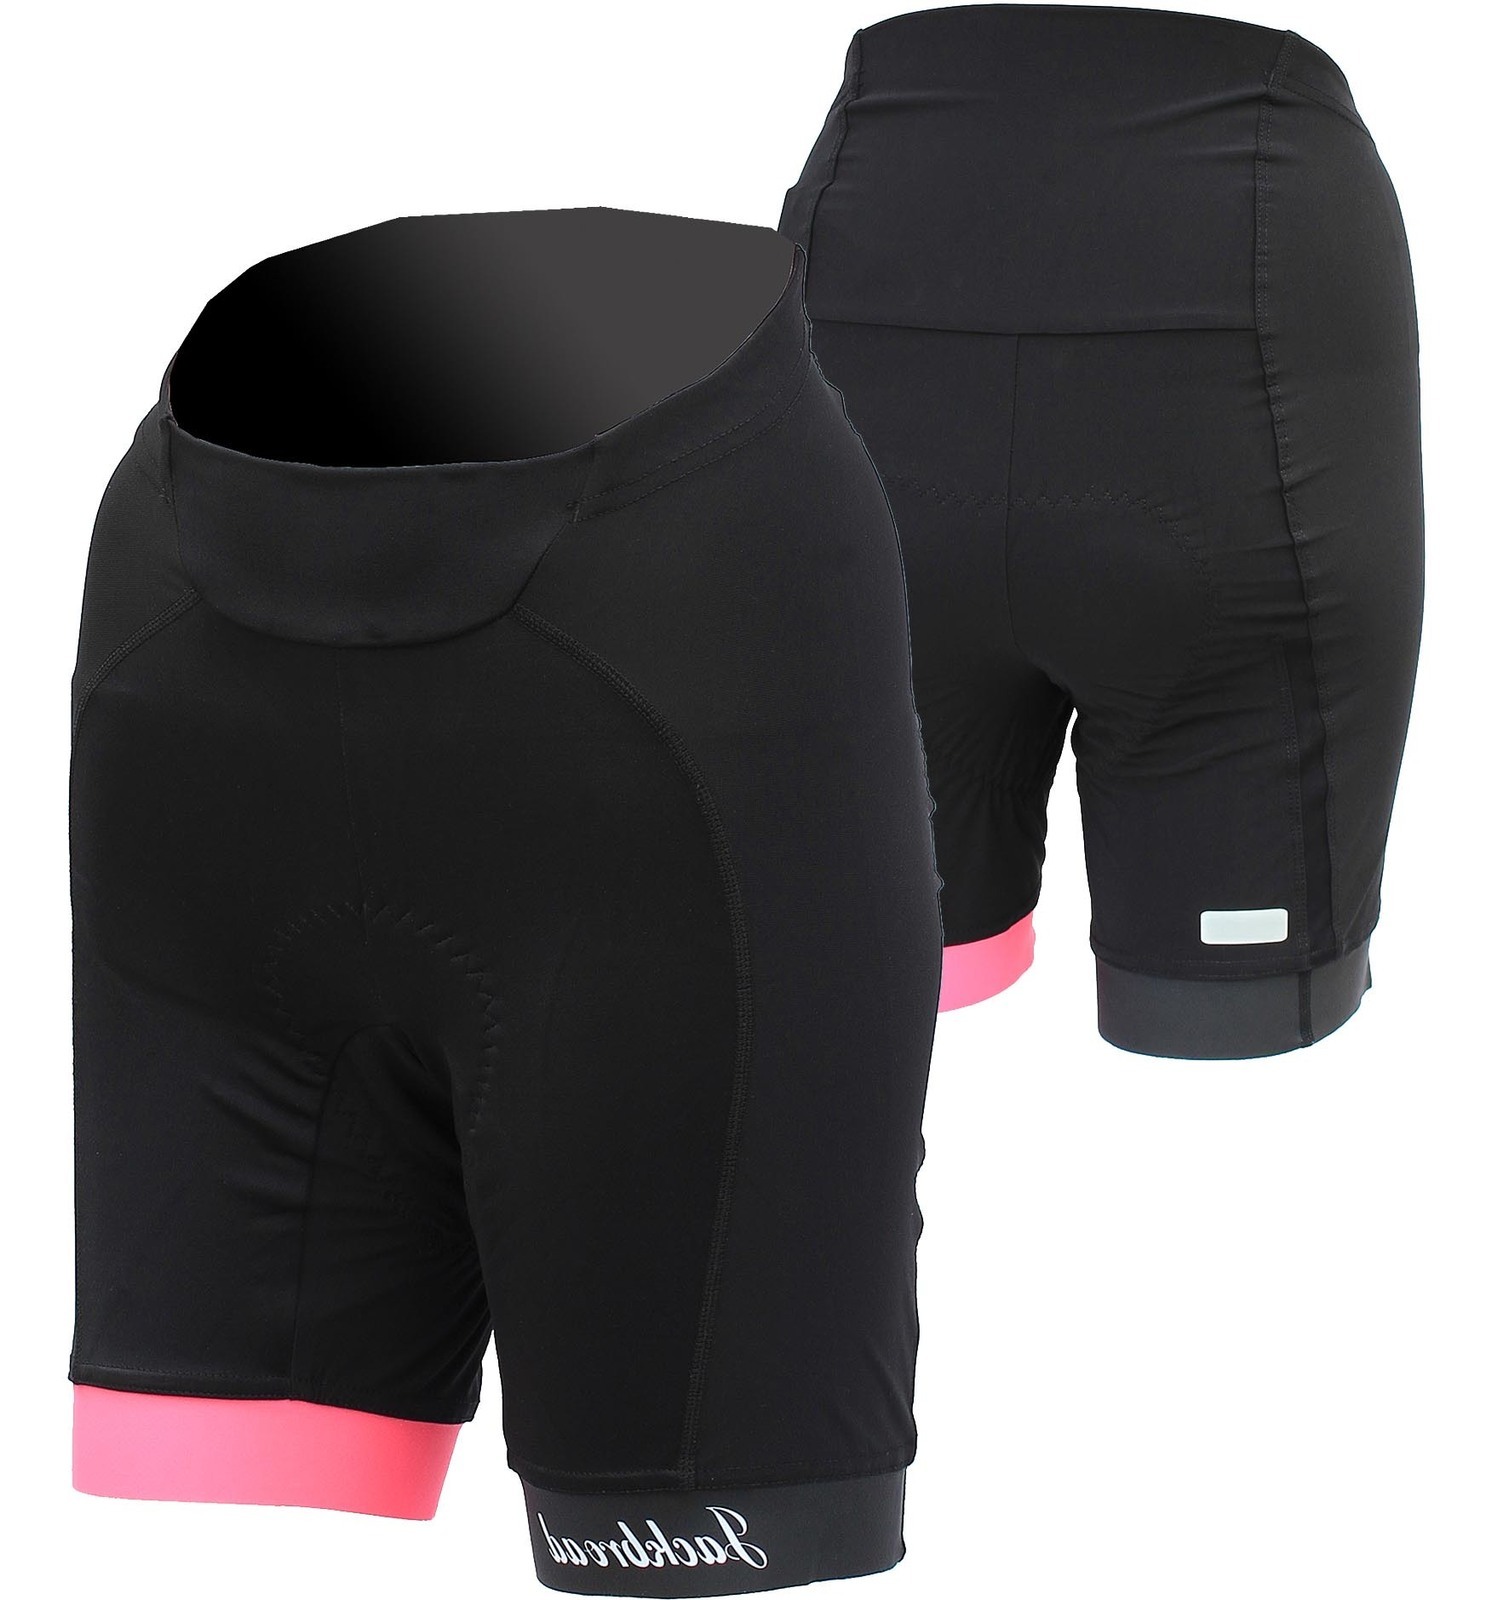 Jackbroad Premium Quality Cycling Padded Shorts Black Pink L